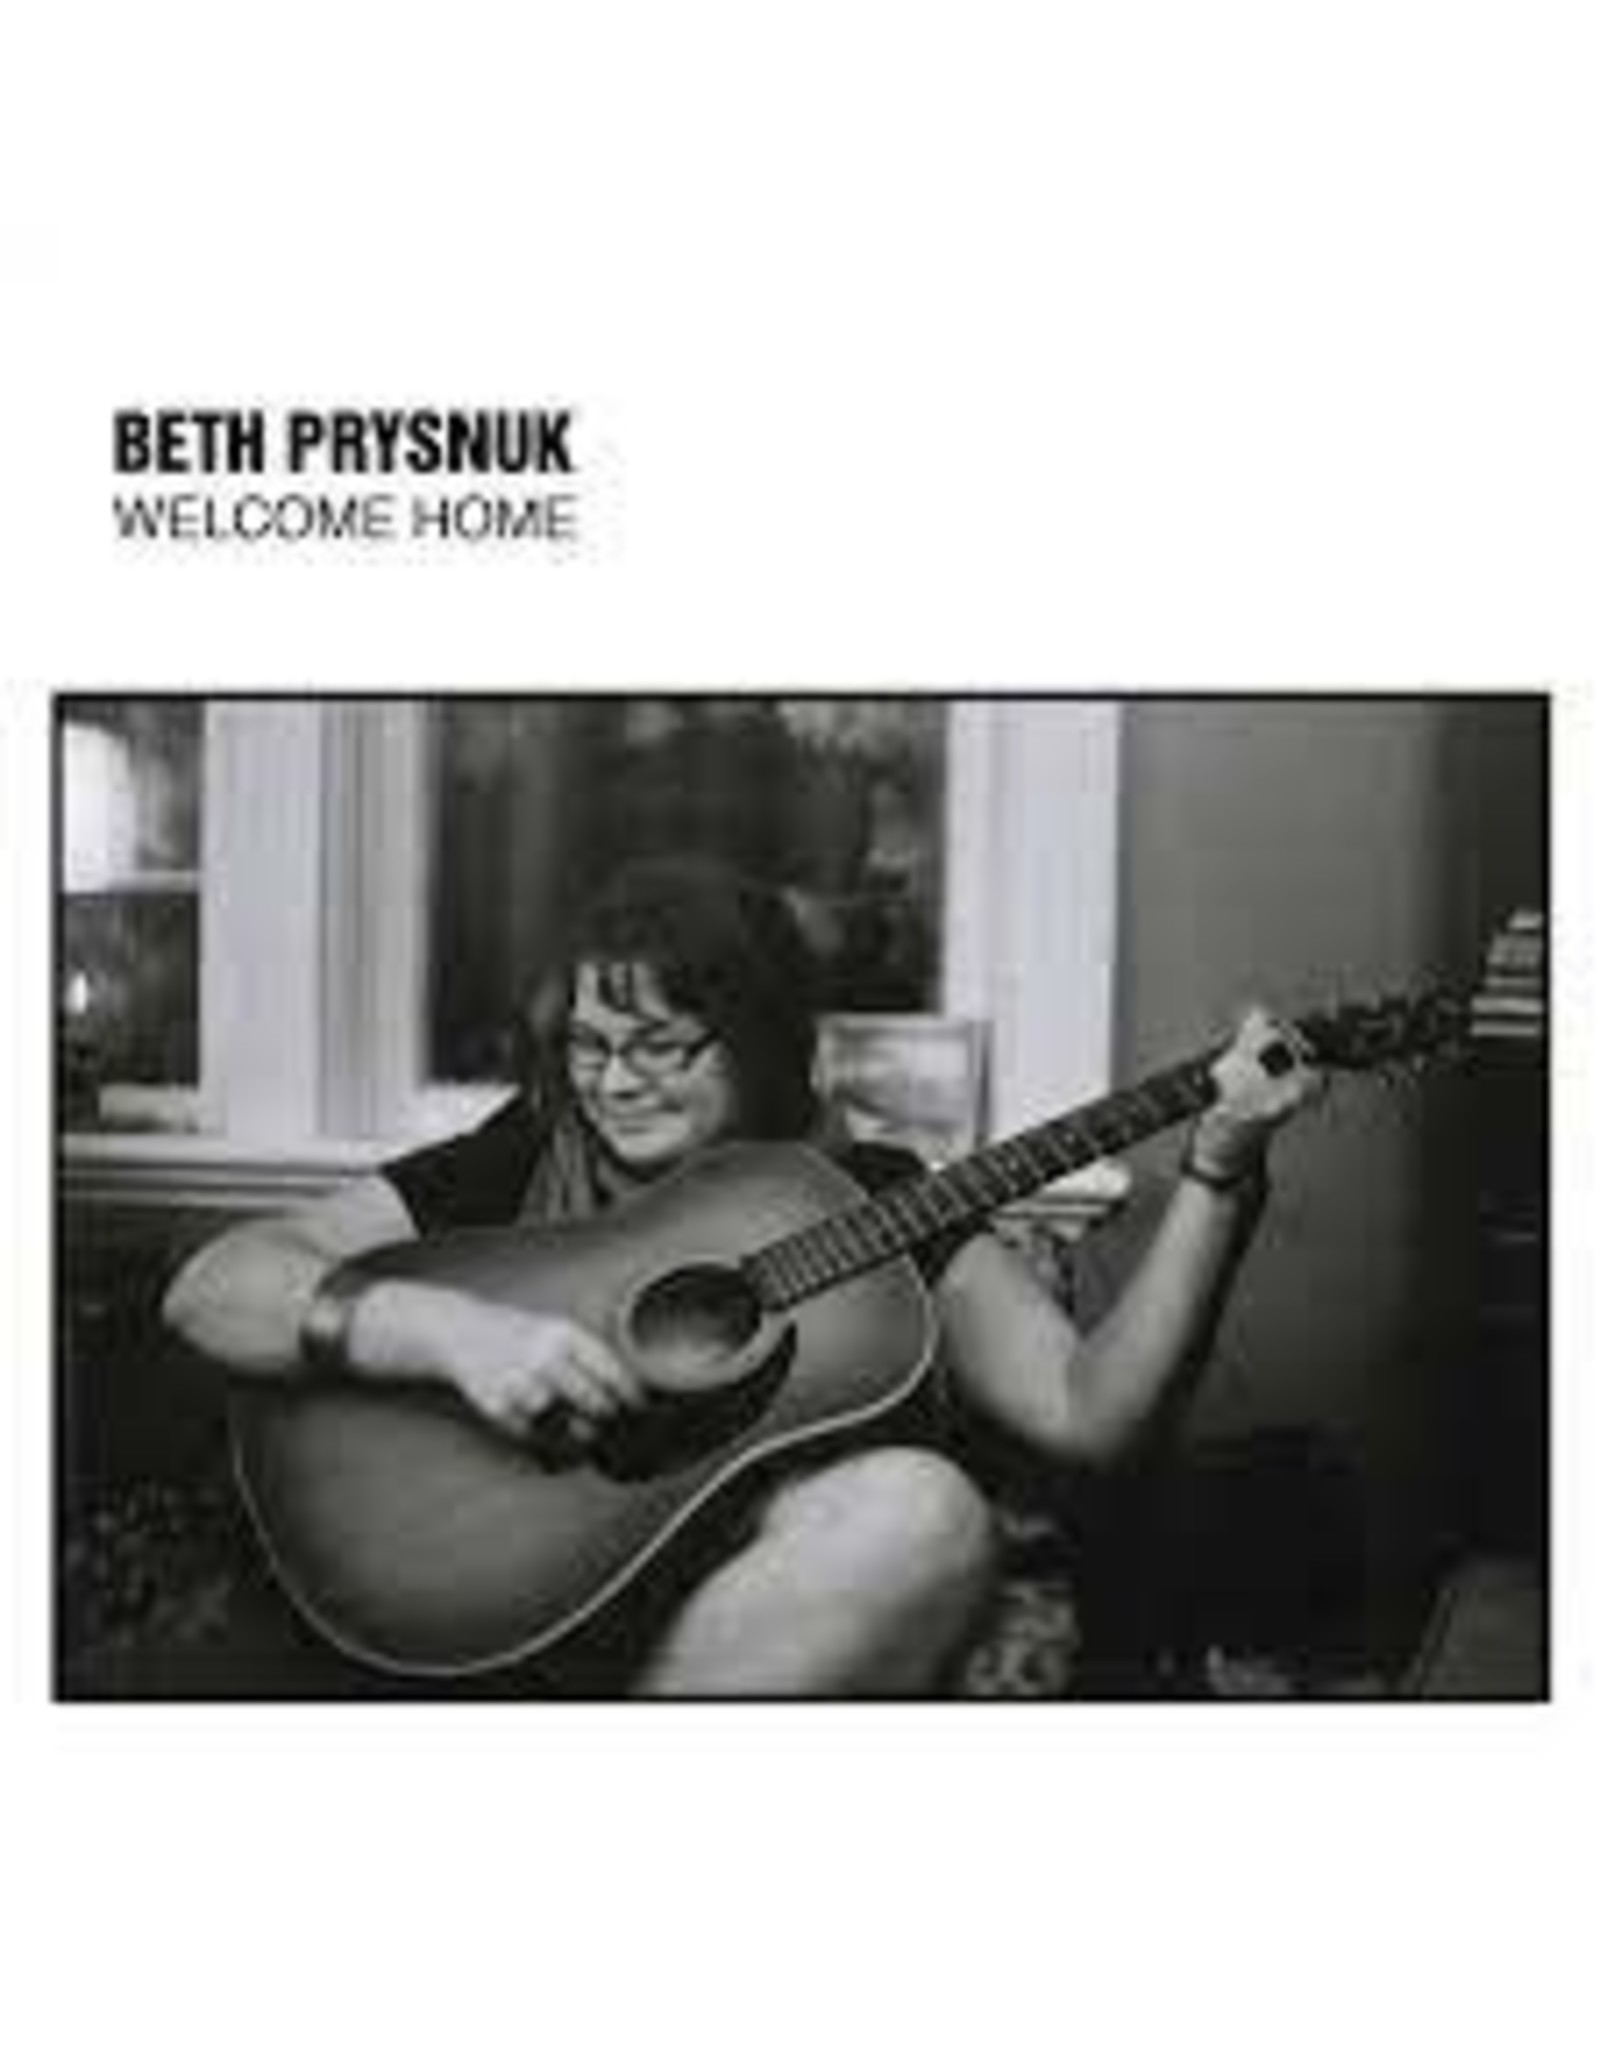 Prysnuk, Beth - Welcome Home CD